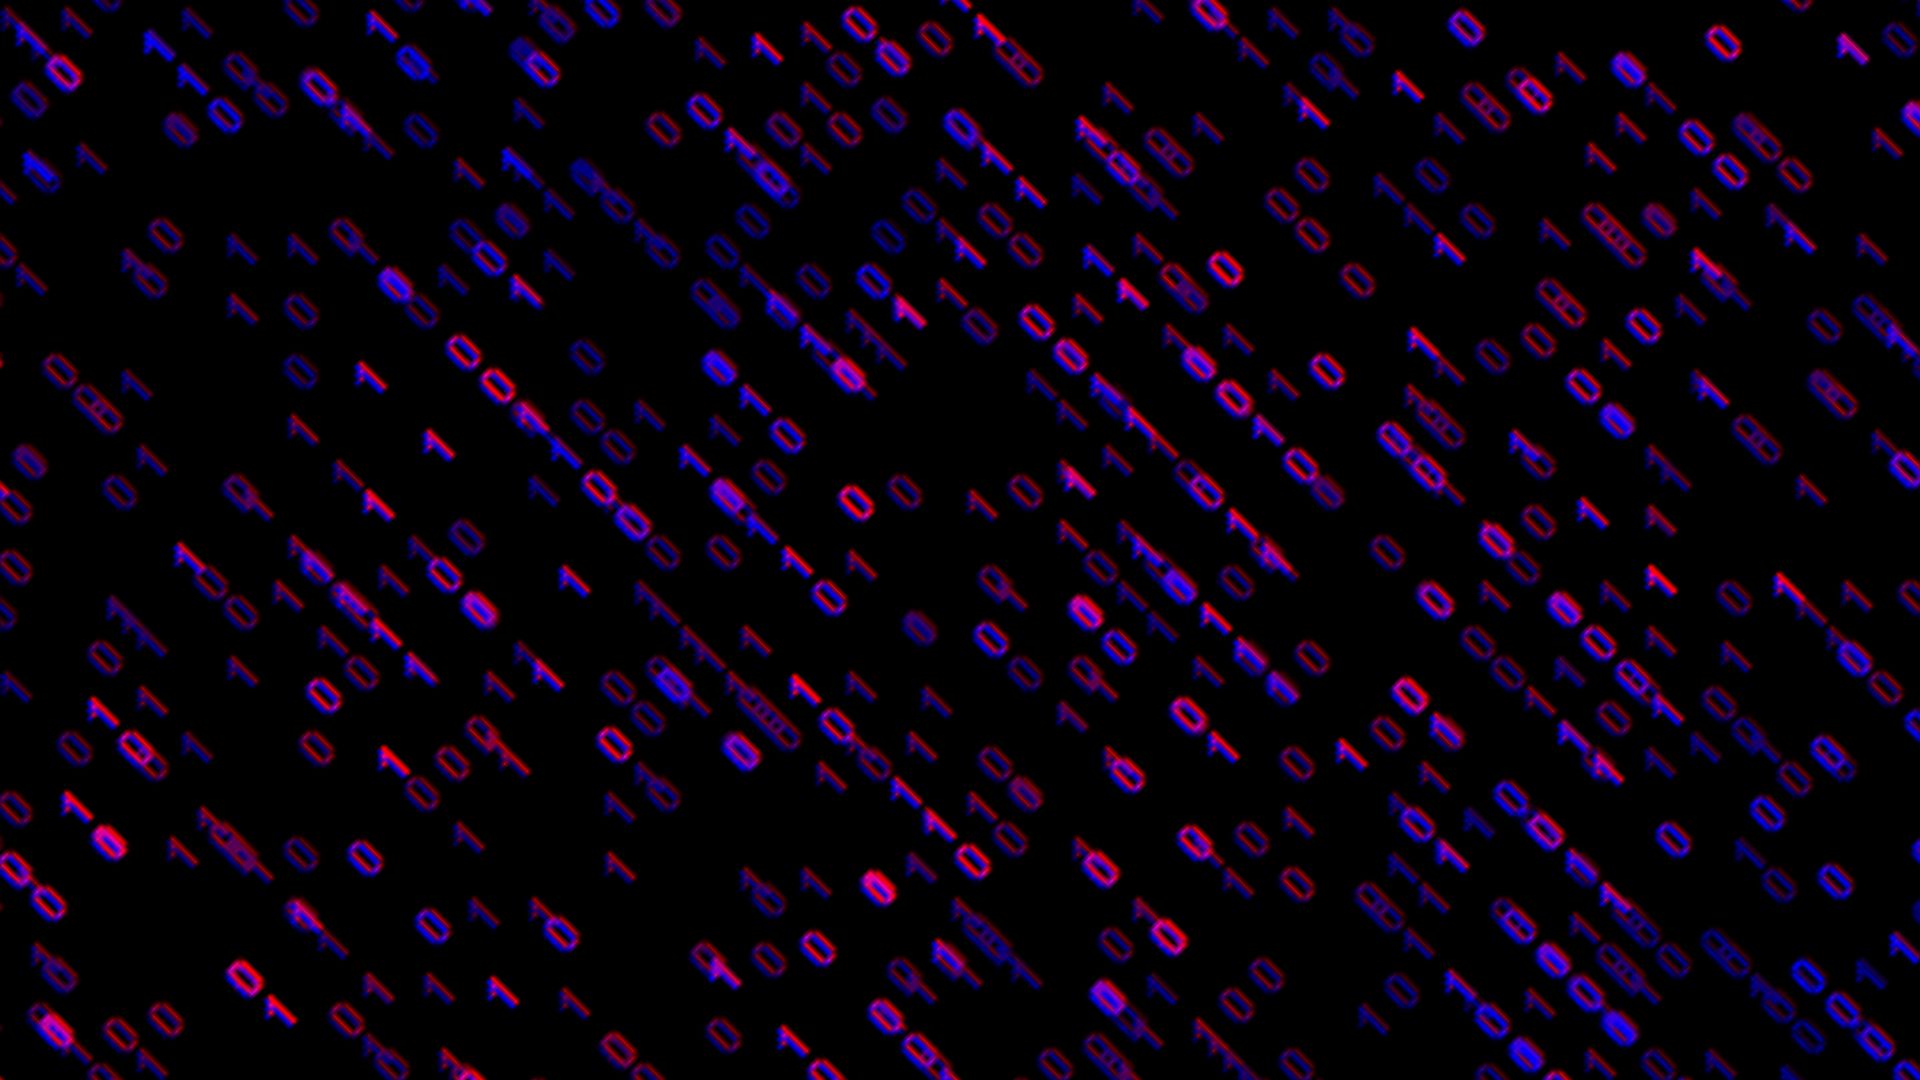 Download wallpaper 1920x1080 code, binary code, glow, pattern full hd,  hdtv, fhd, 1080p hd background